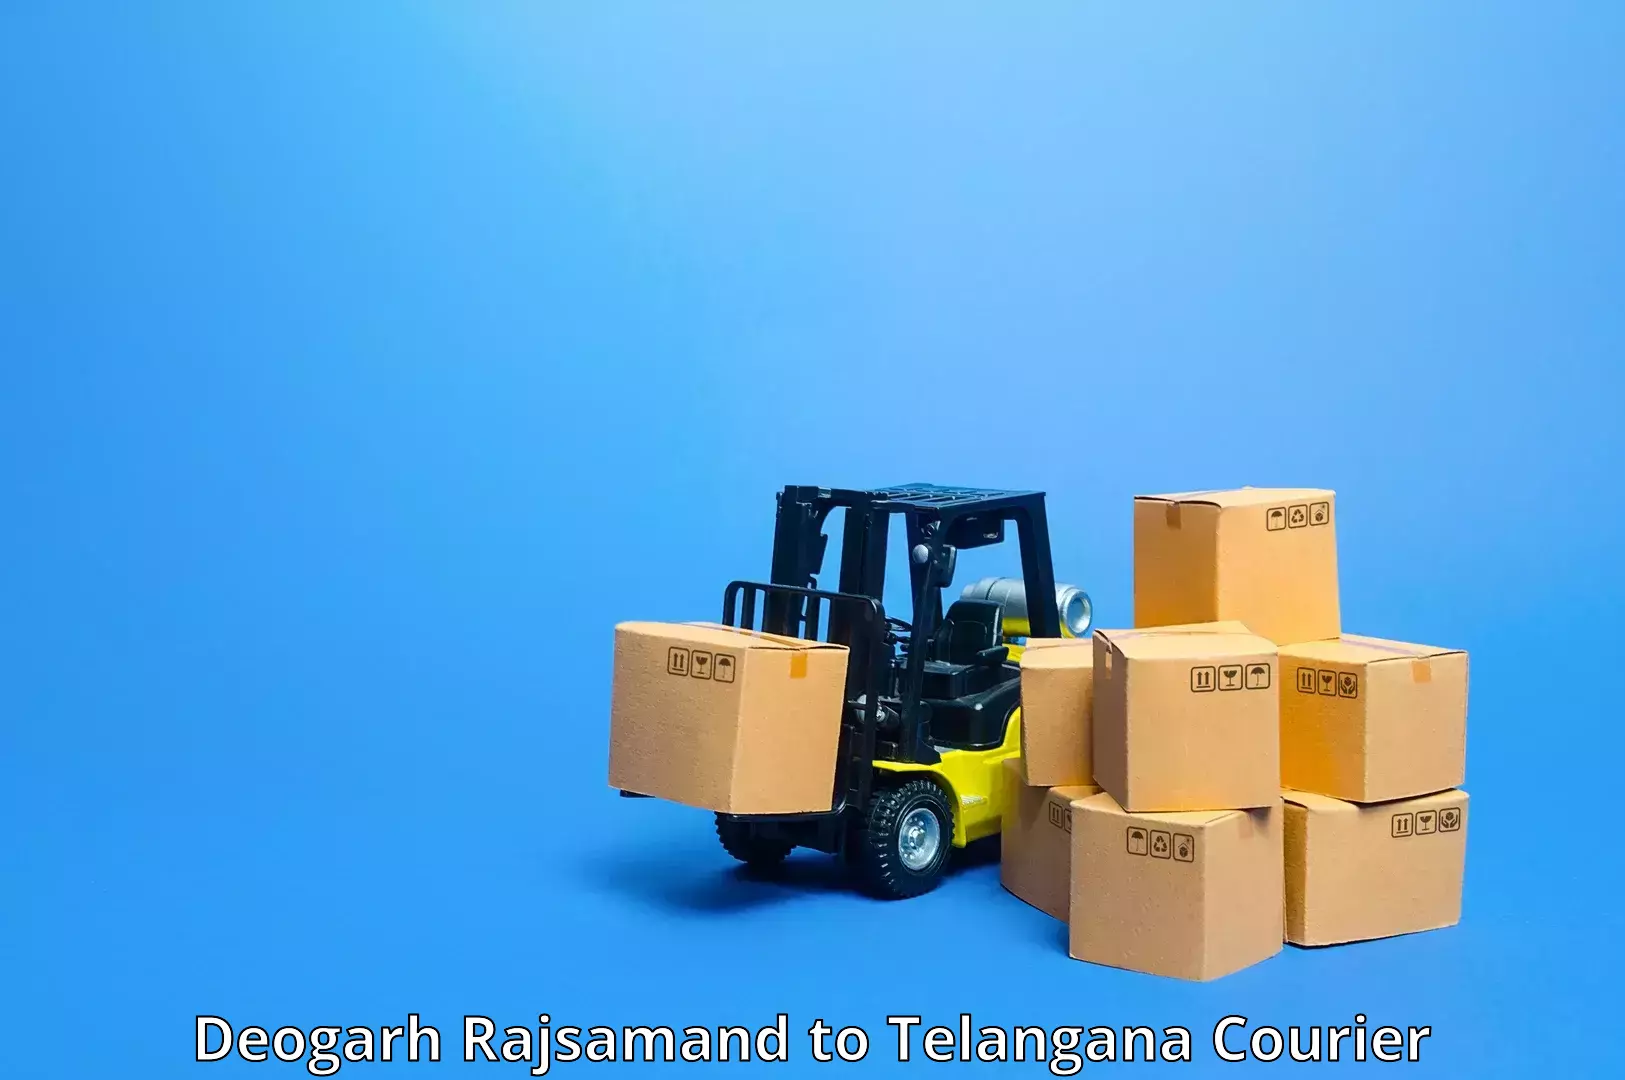 State-of-the-art courier technology Deogarh Rajsamand to Balanagar